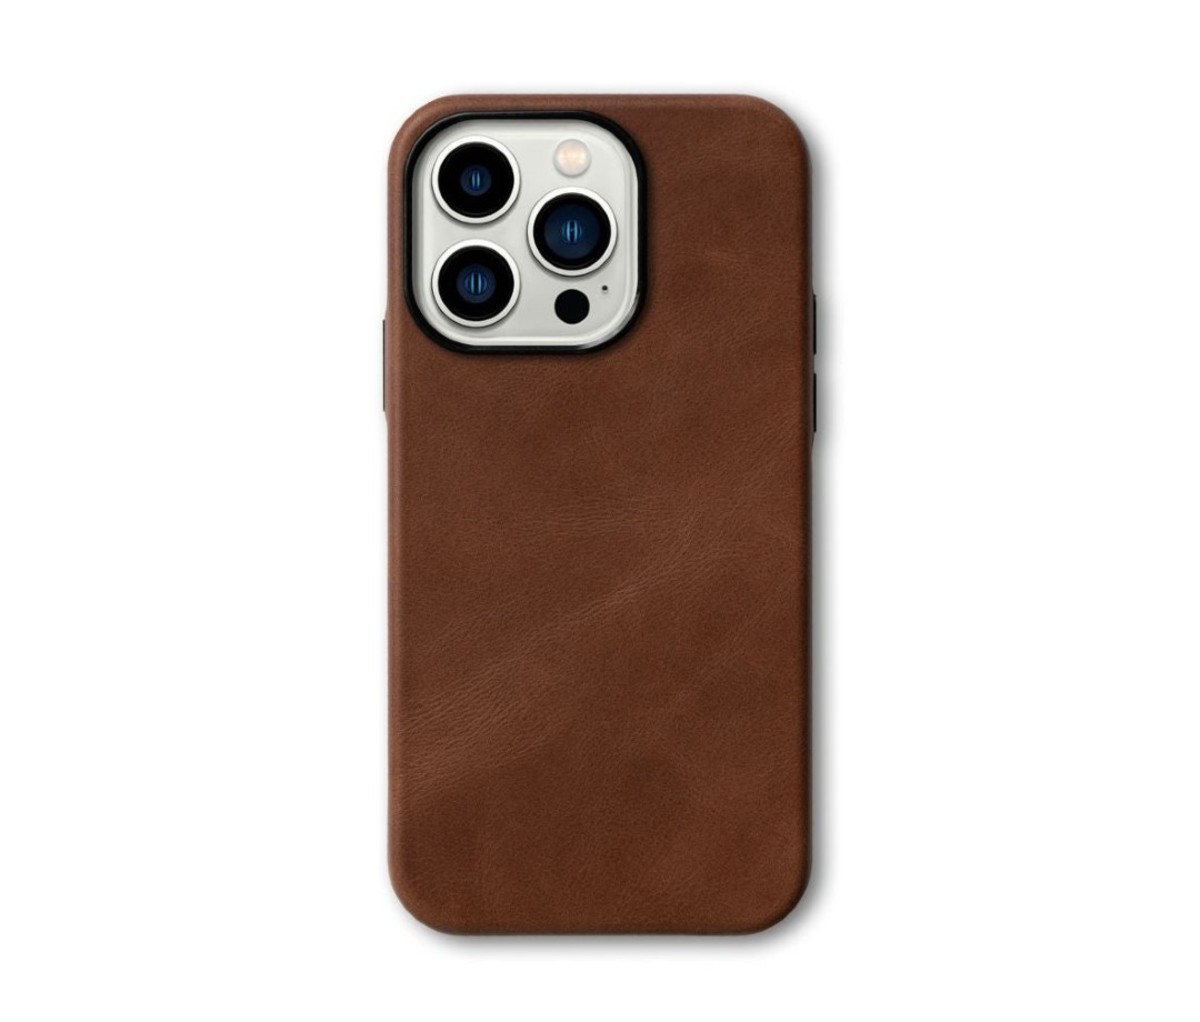 The Aspen Leather iPhone Case